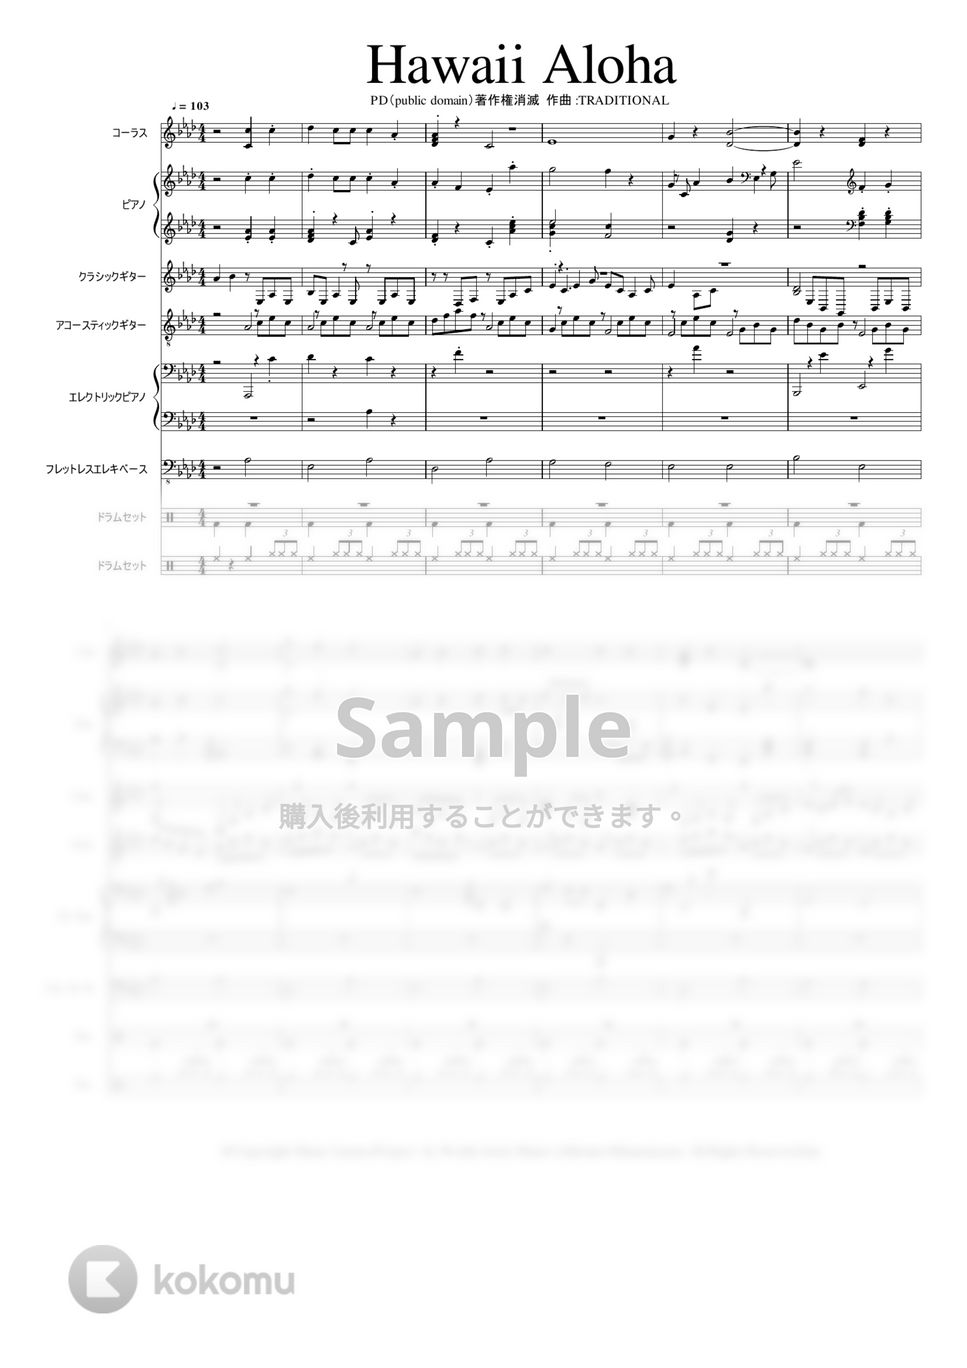 HAWAII ALOHA (作曲：TRADITIONAL P.D.) by Mitsuru Minamiyama